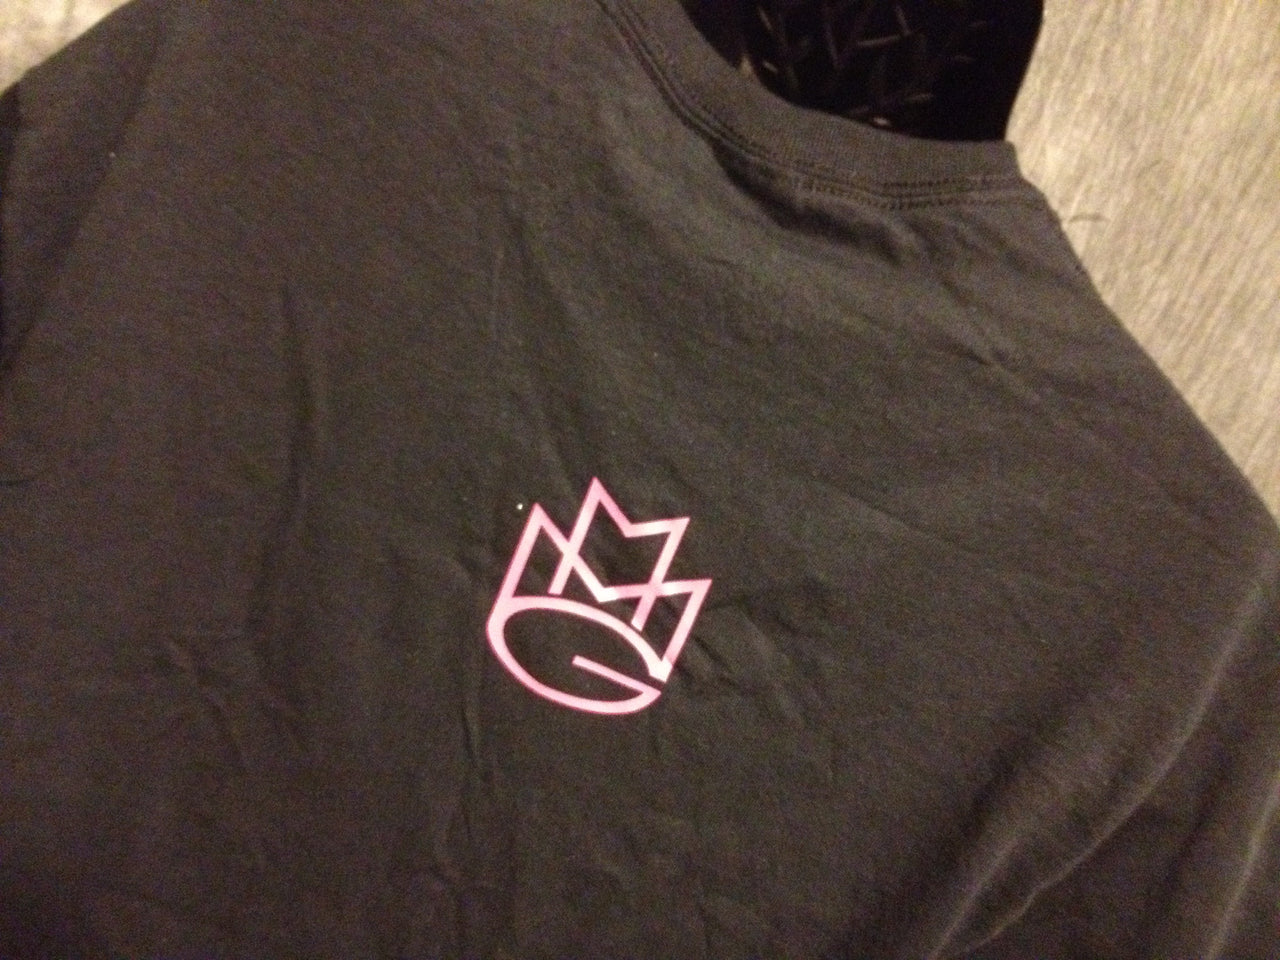 Maybach Music Group Tshirt: Black With Pink Print - TshirtNow.net - 3